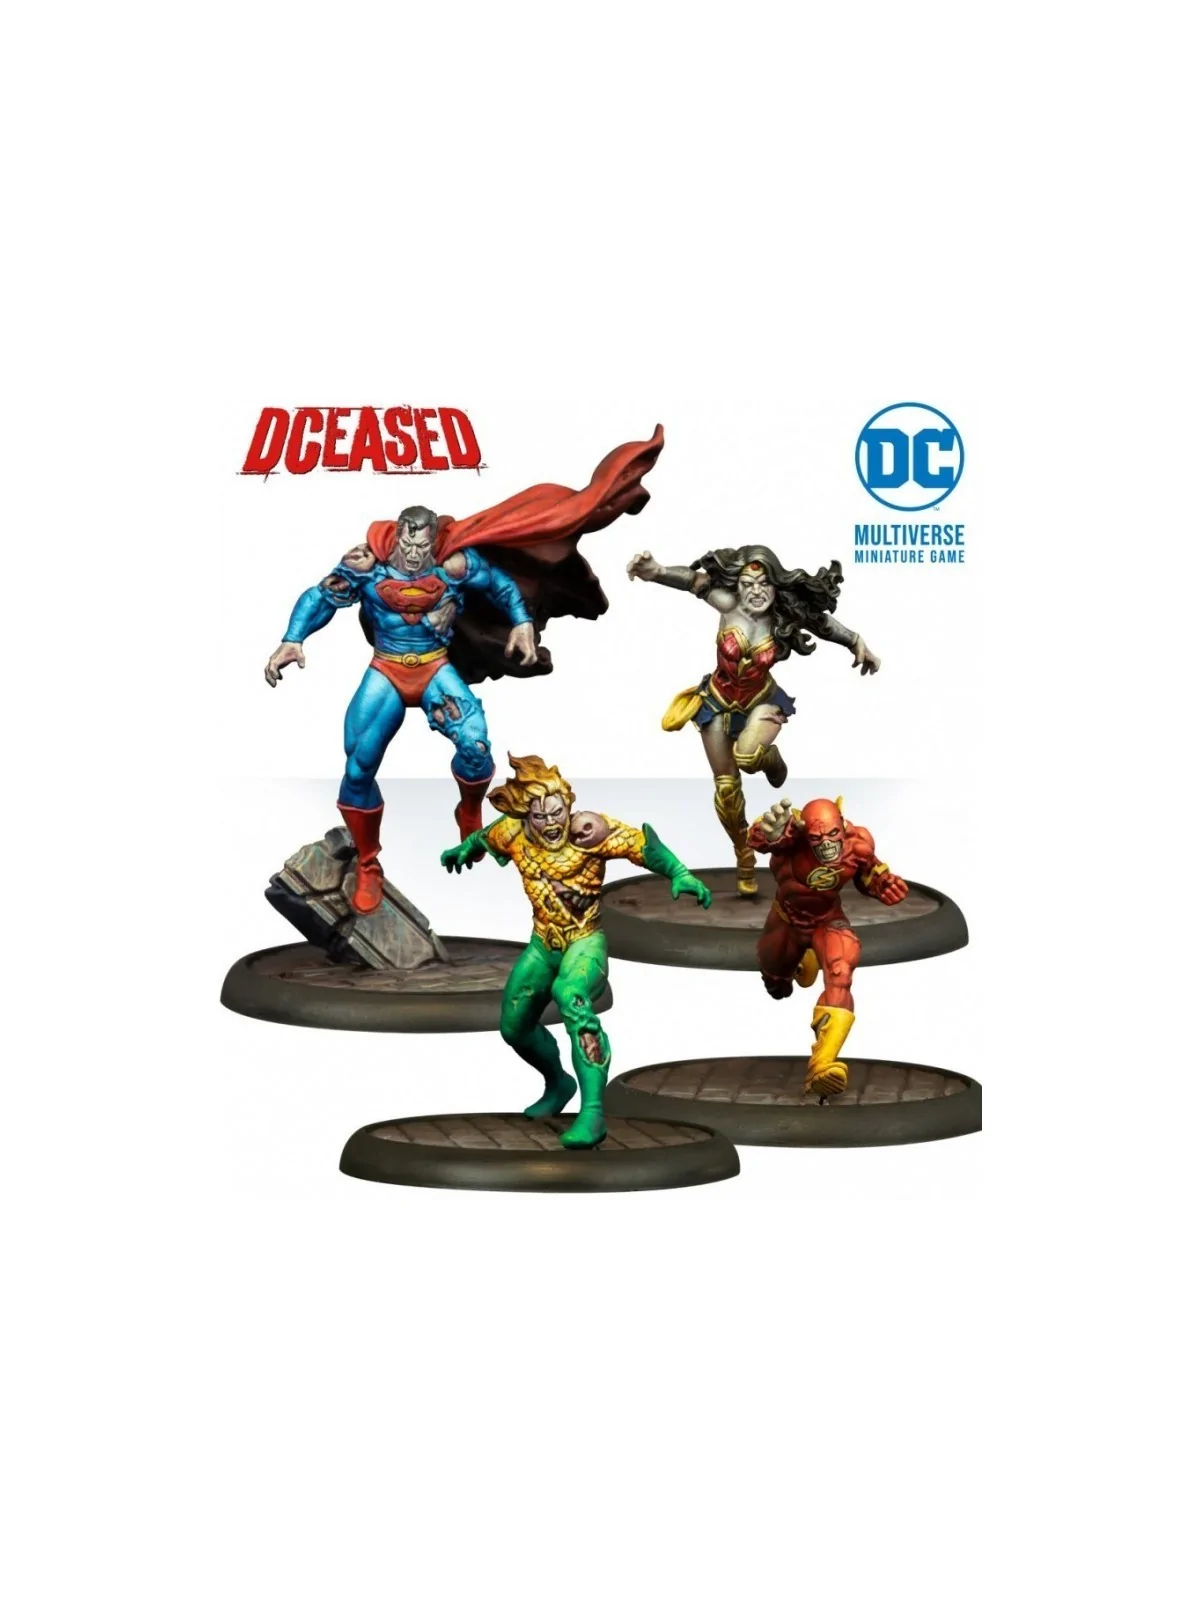 Comprar DC Universe Miniature Game: Justice League DCeased (Inglés) ba